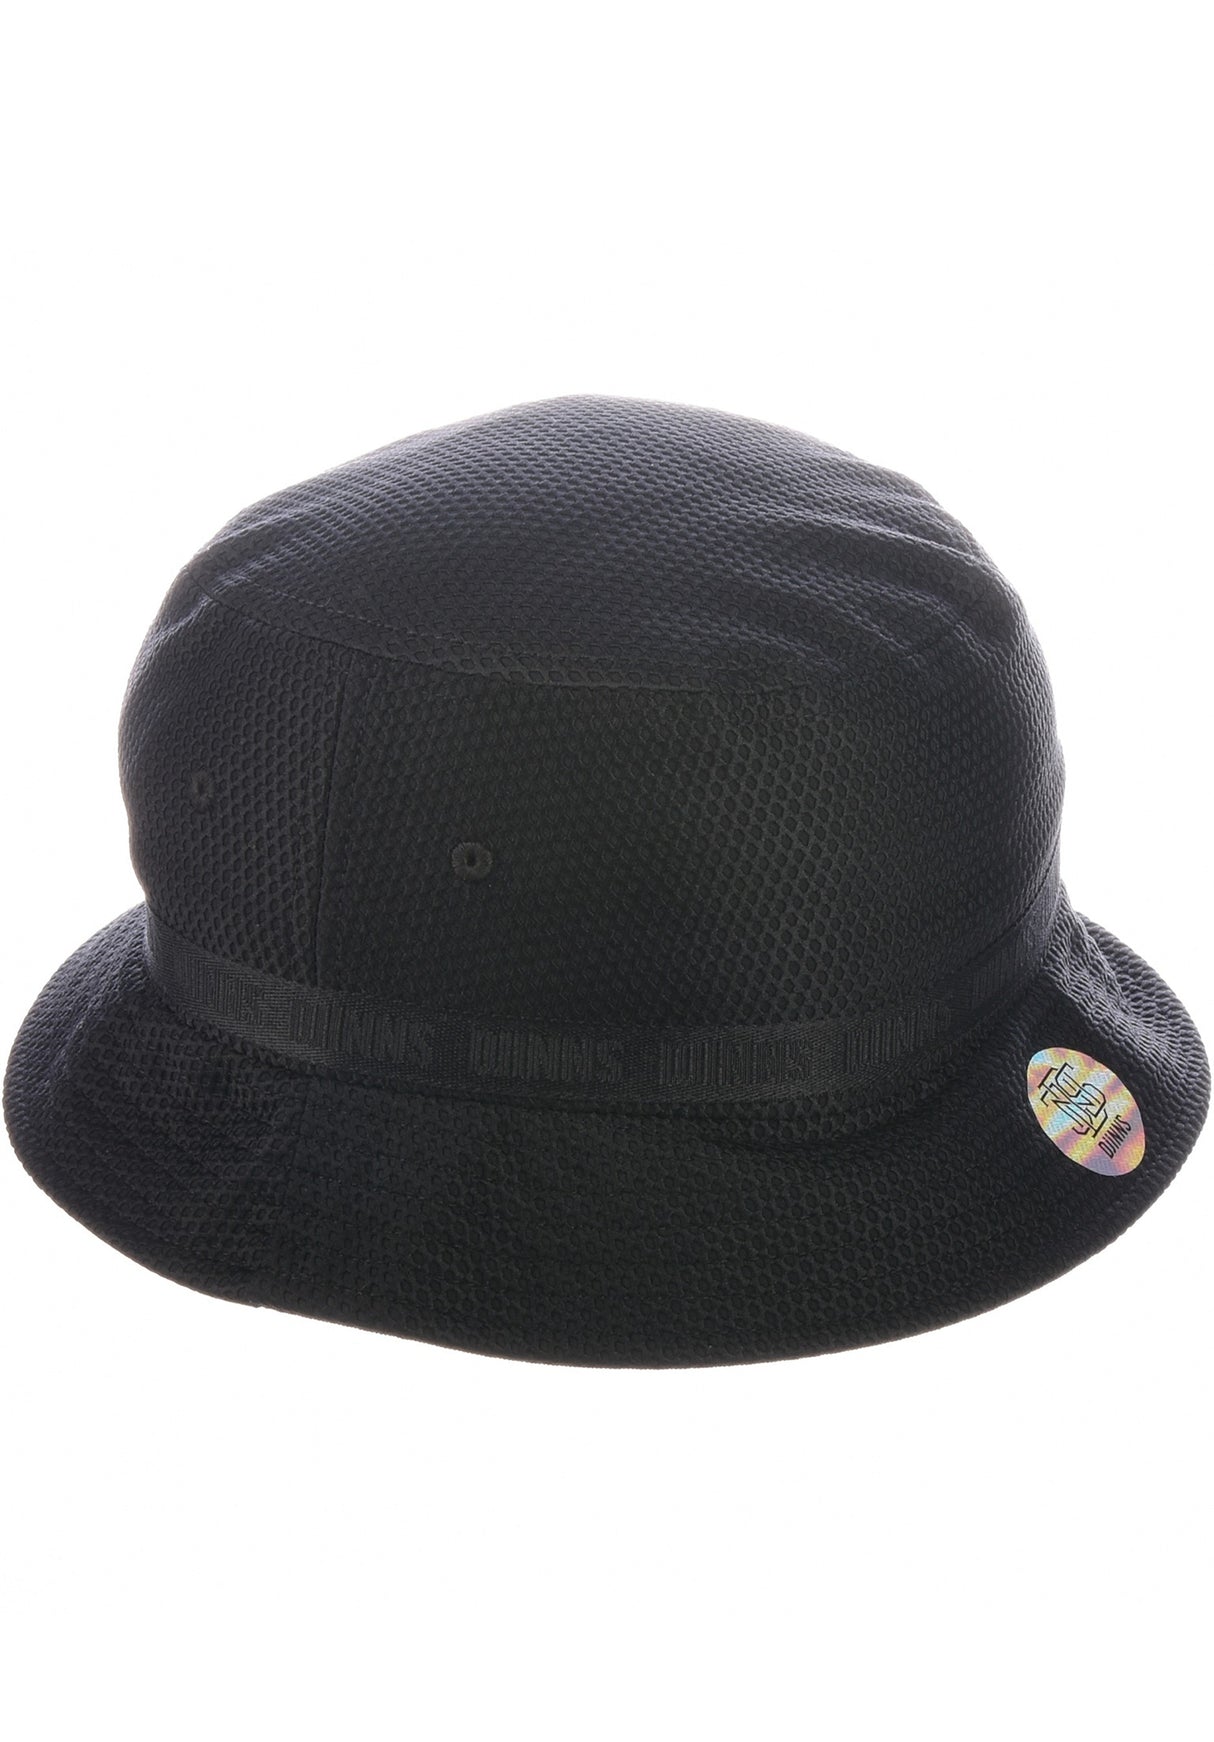 Bucket Hat Honey Nylon black Close-Up2